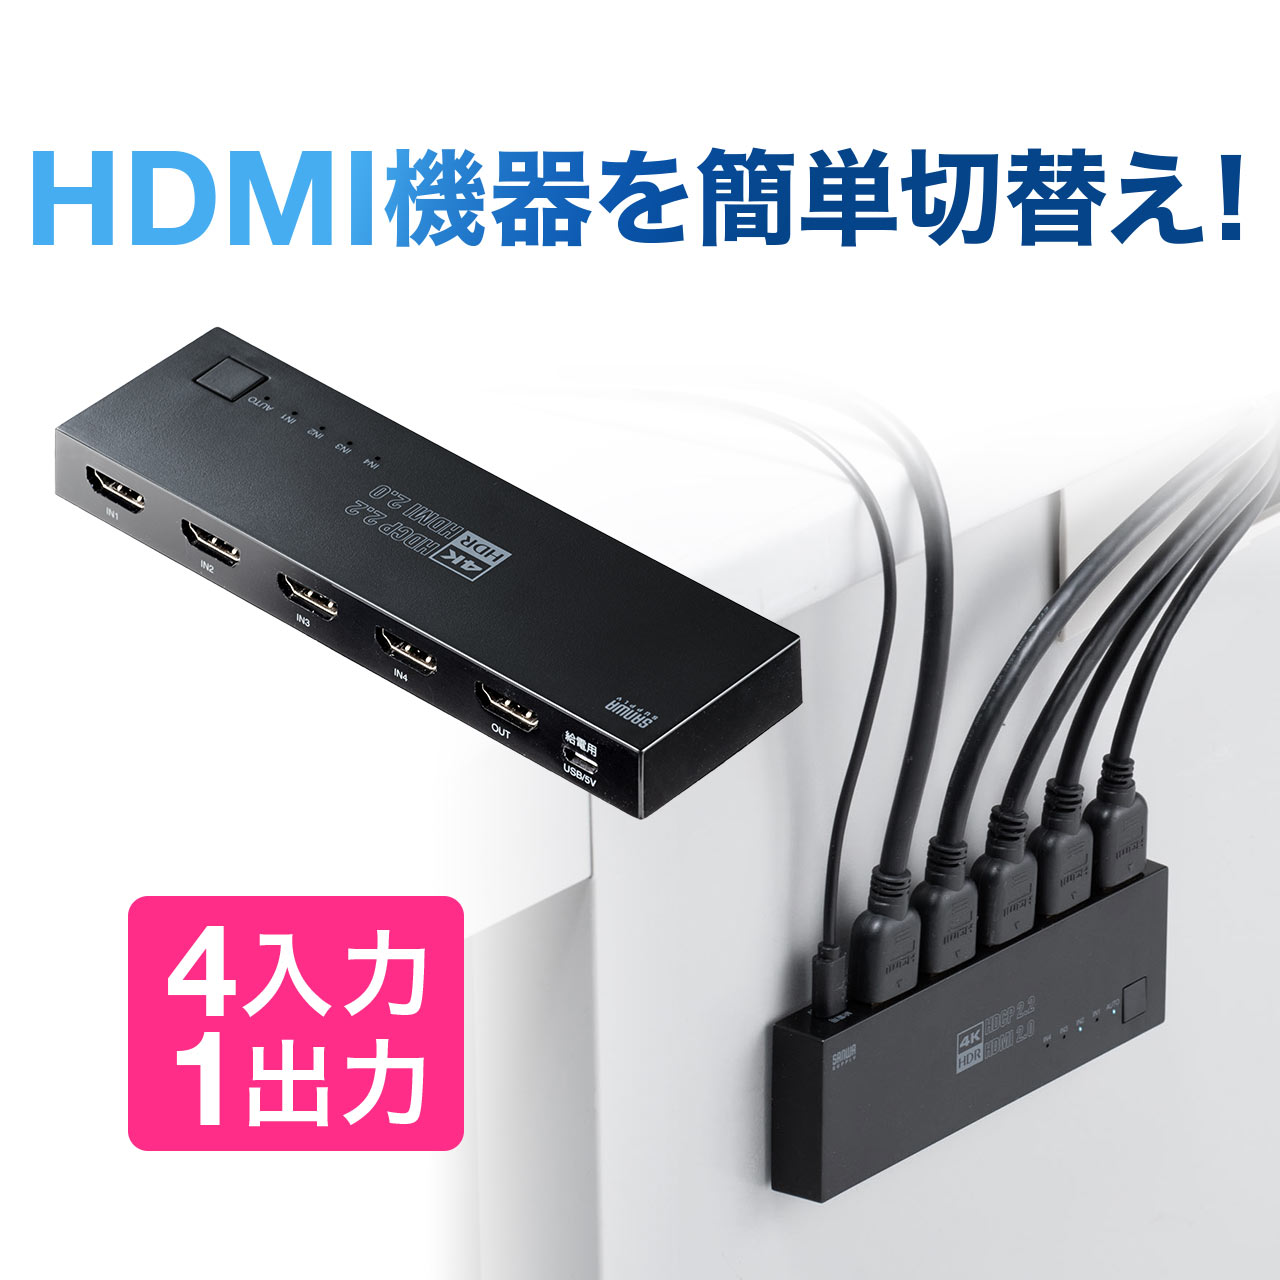 HDMI 切替器 4K 60Hz HDR HDCP2.2 自動 手動切り替え 4入力1出力 セレクター マグネットシート付 パソコン